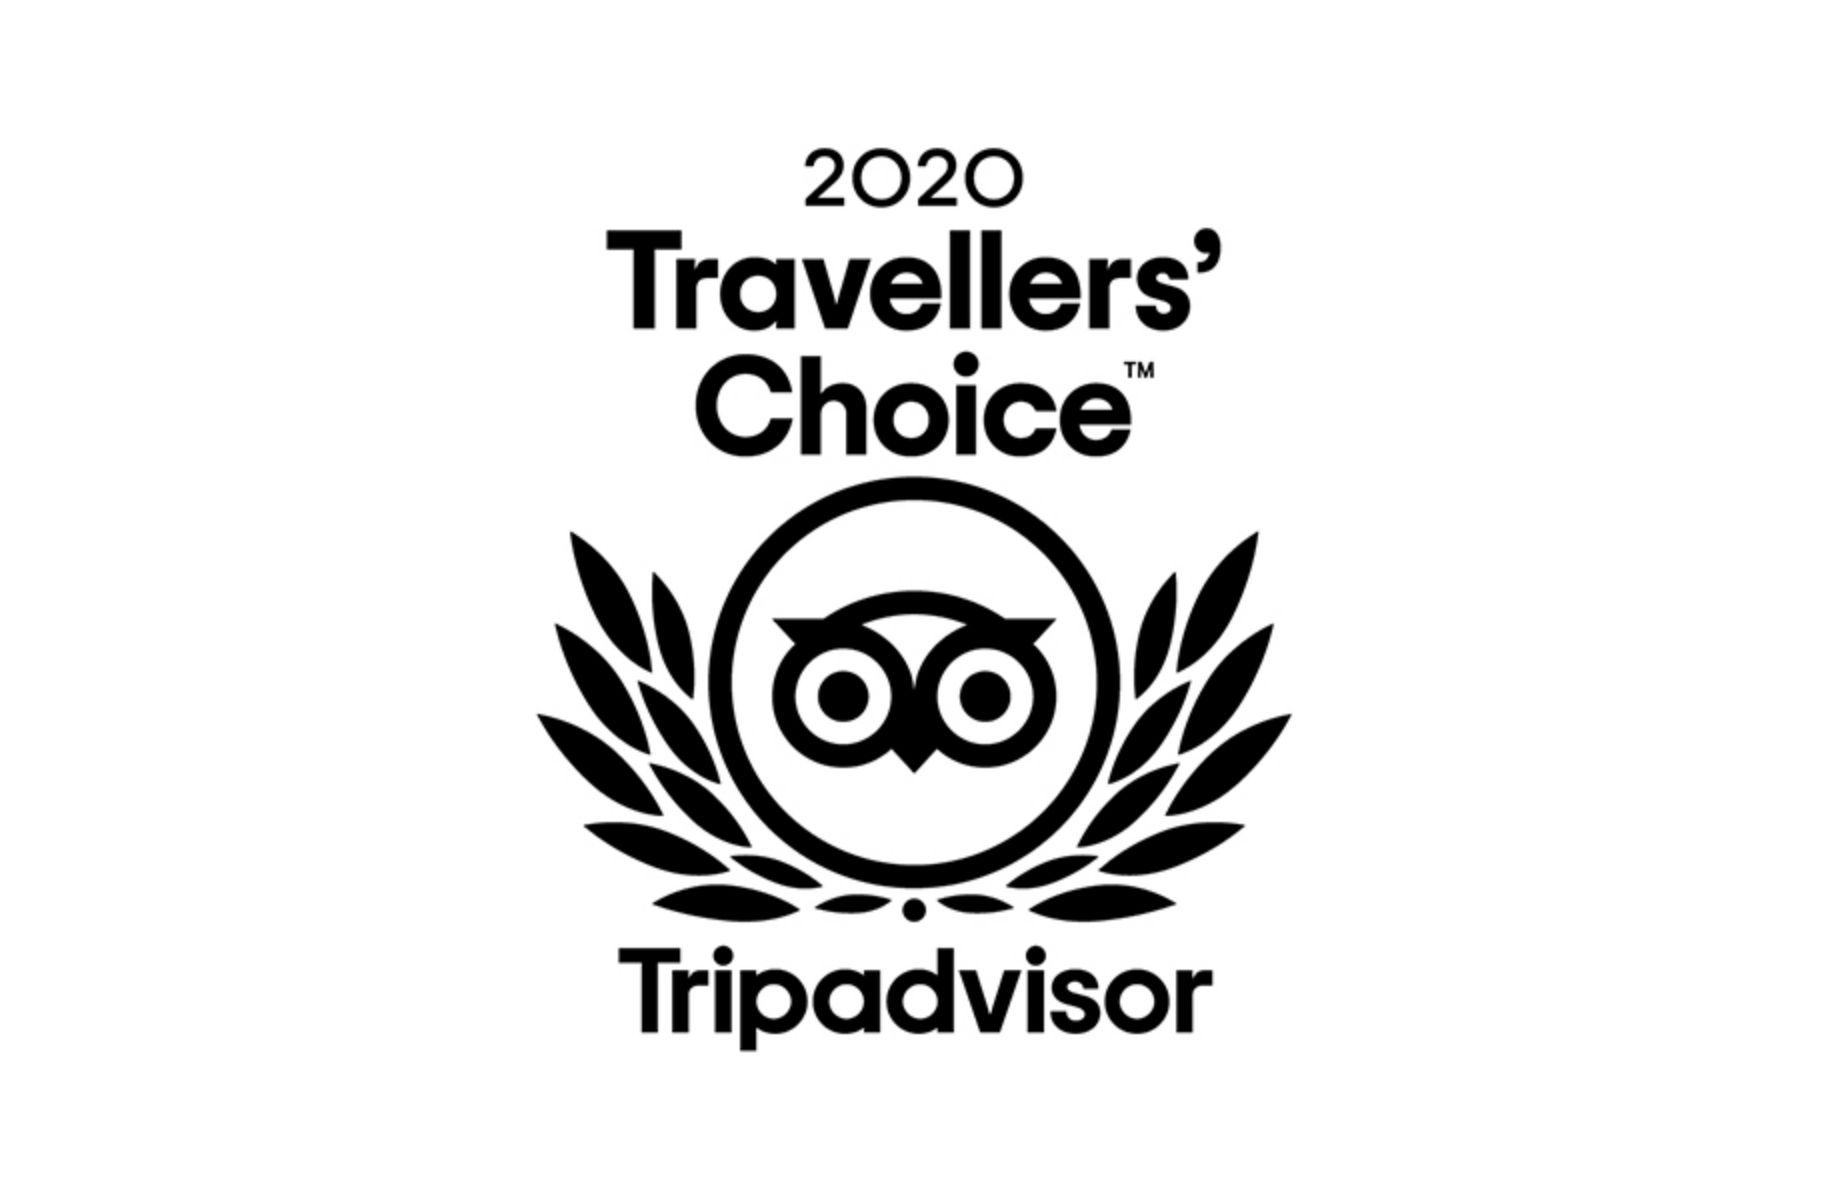 Tripadvisor 2020 Travellers’ Choice Awards